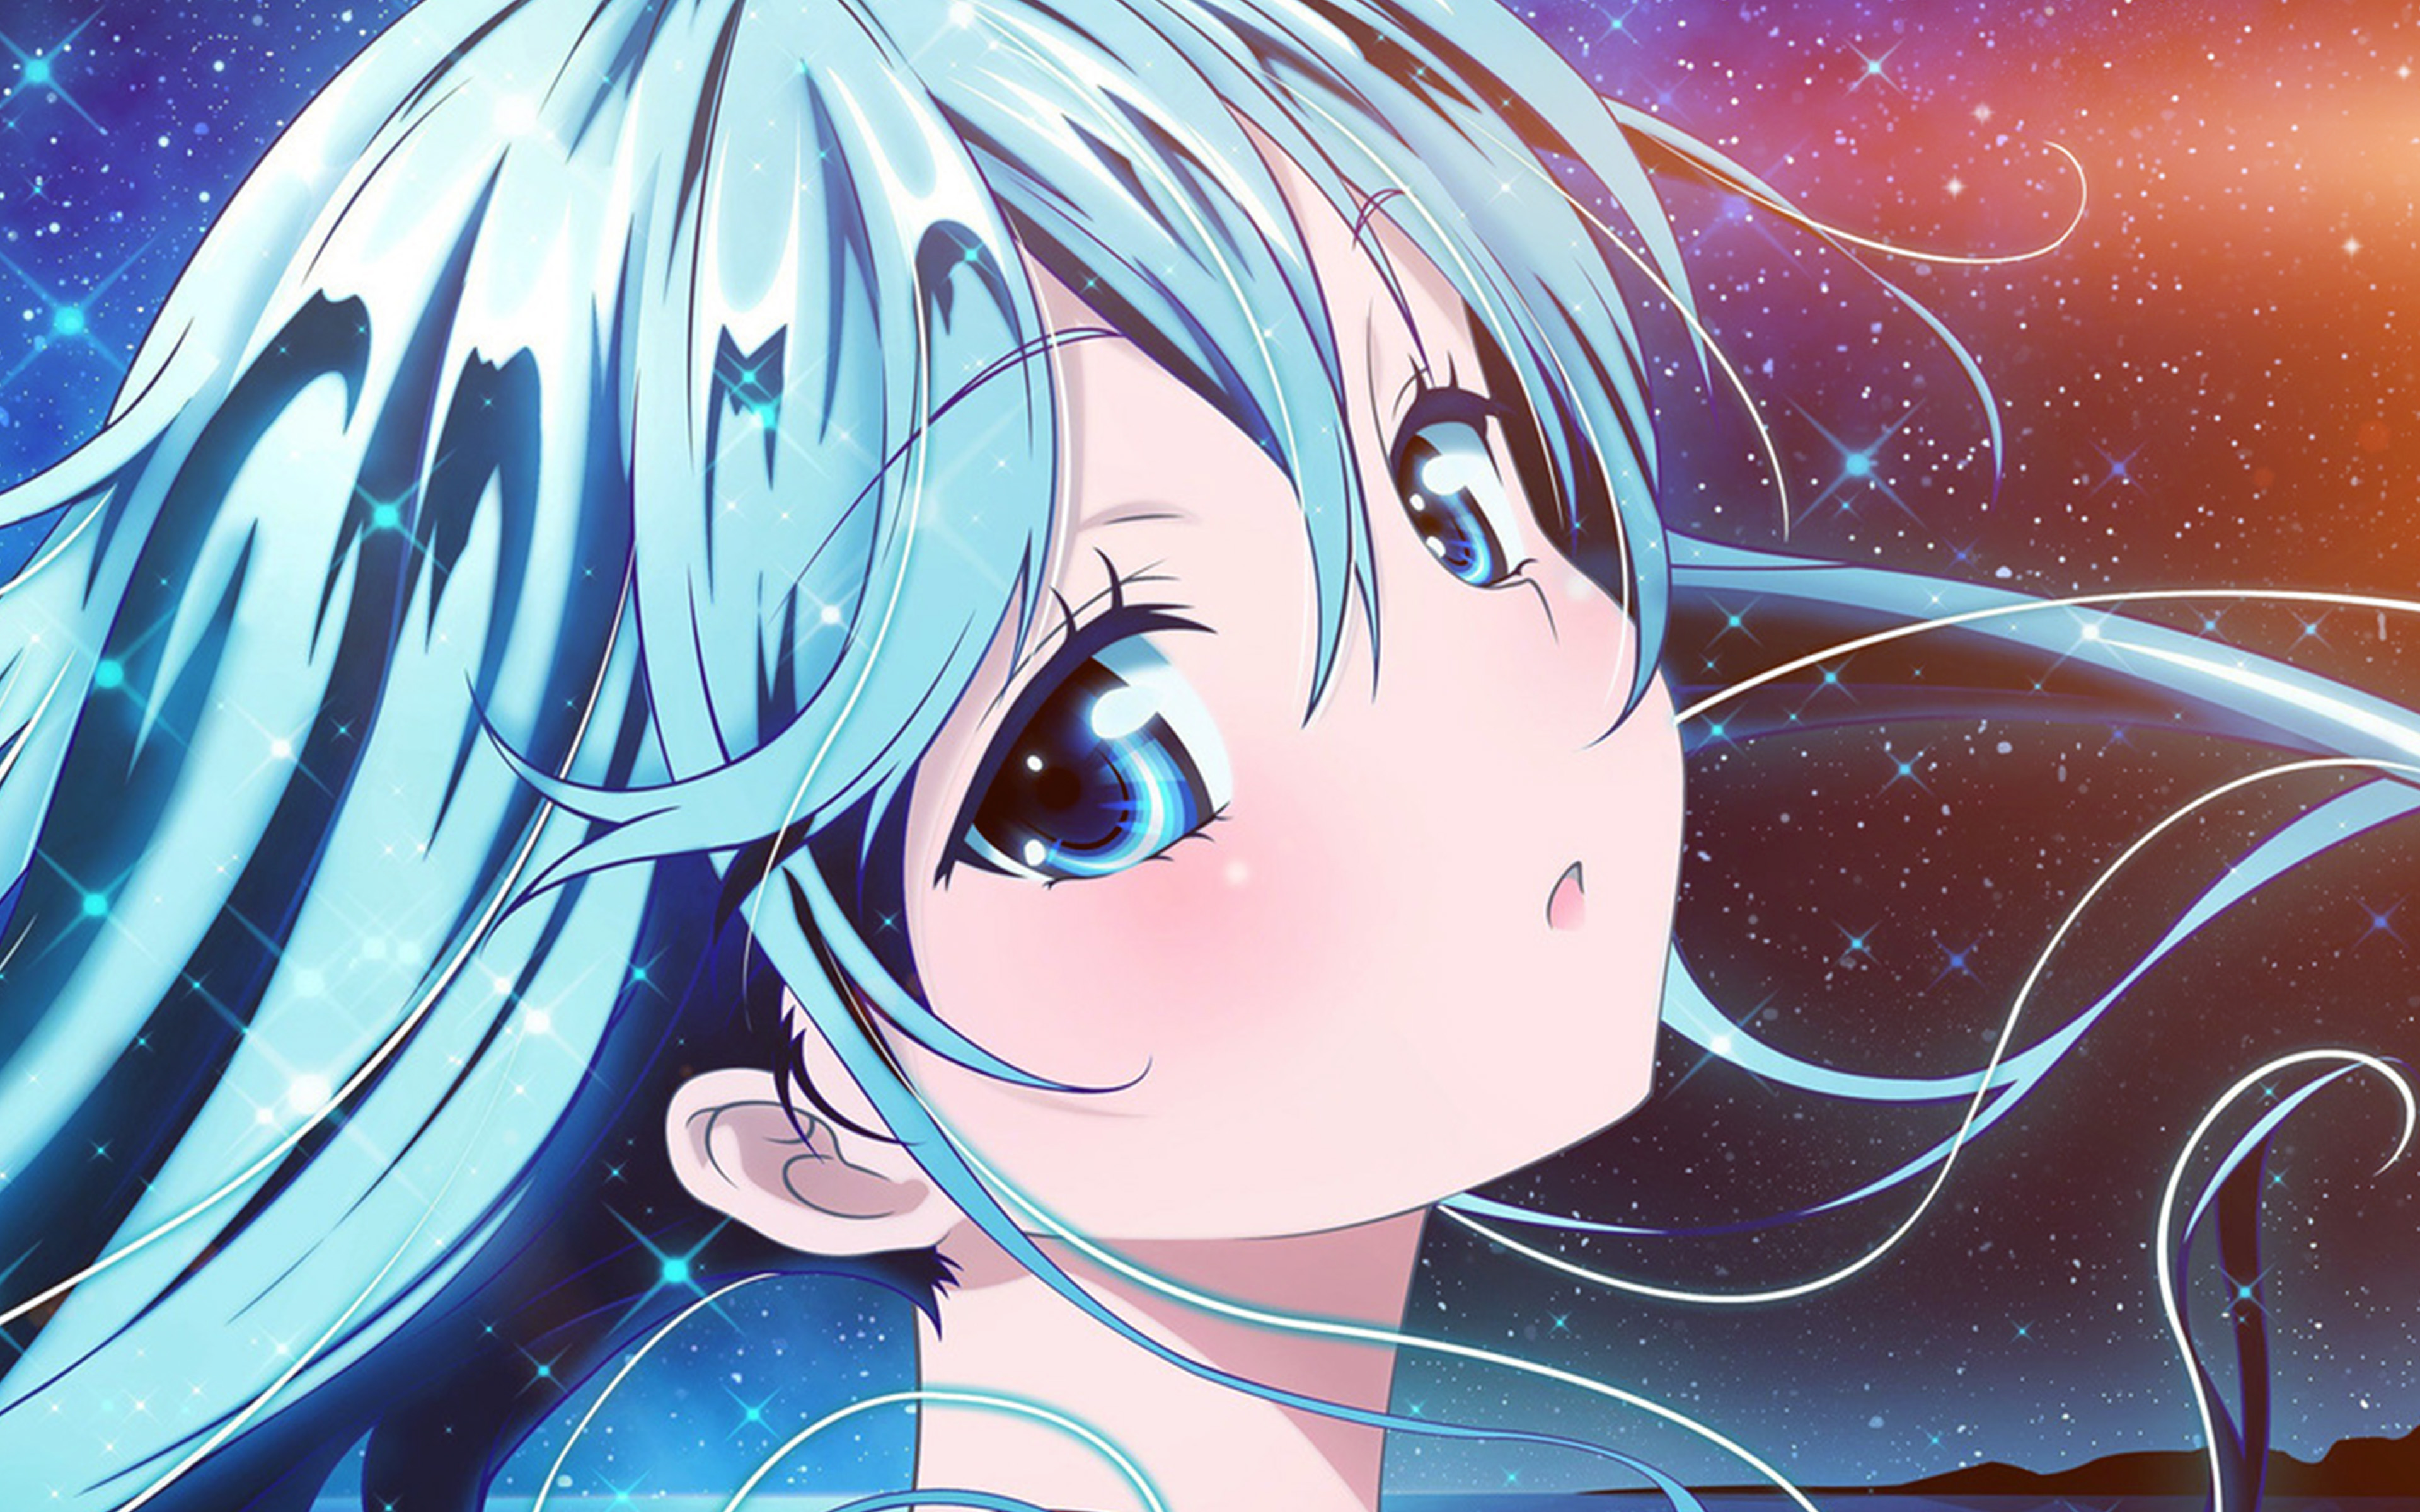 wallpaper for desktop, laptop. anime girl blue beautiful arum art illustration flare